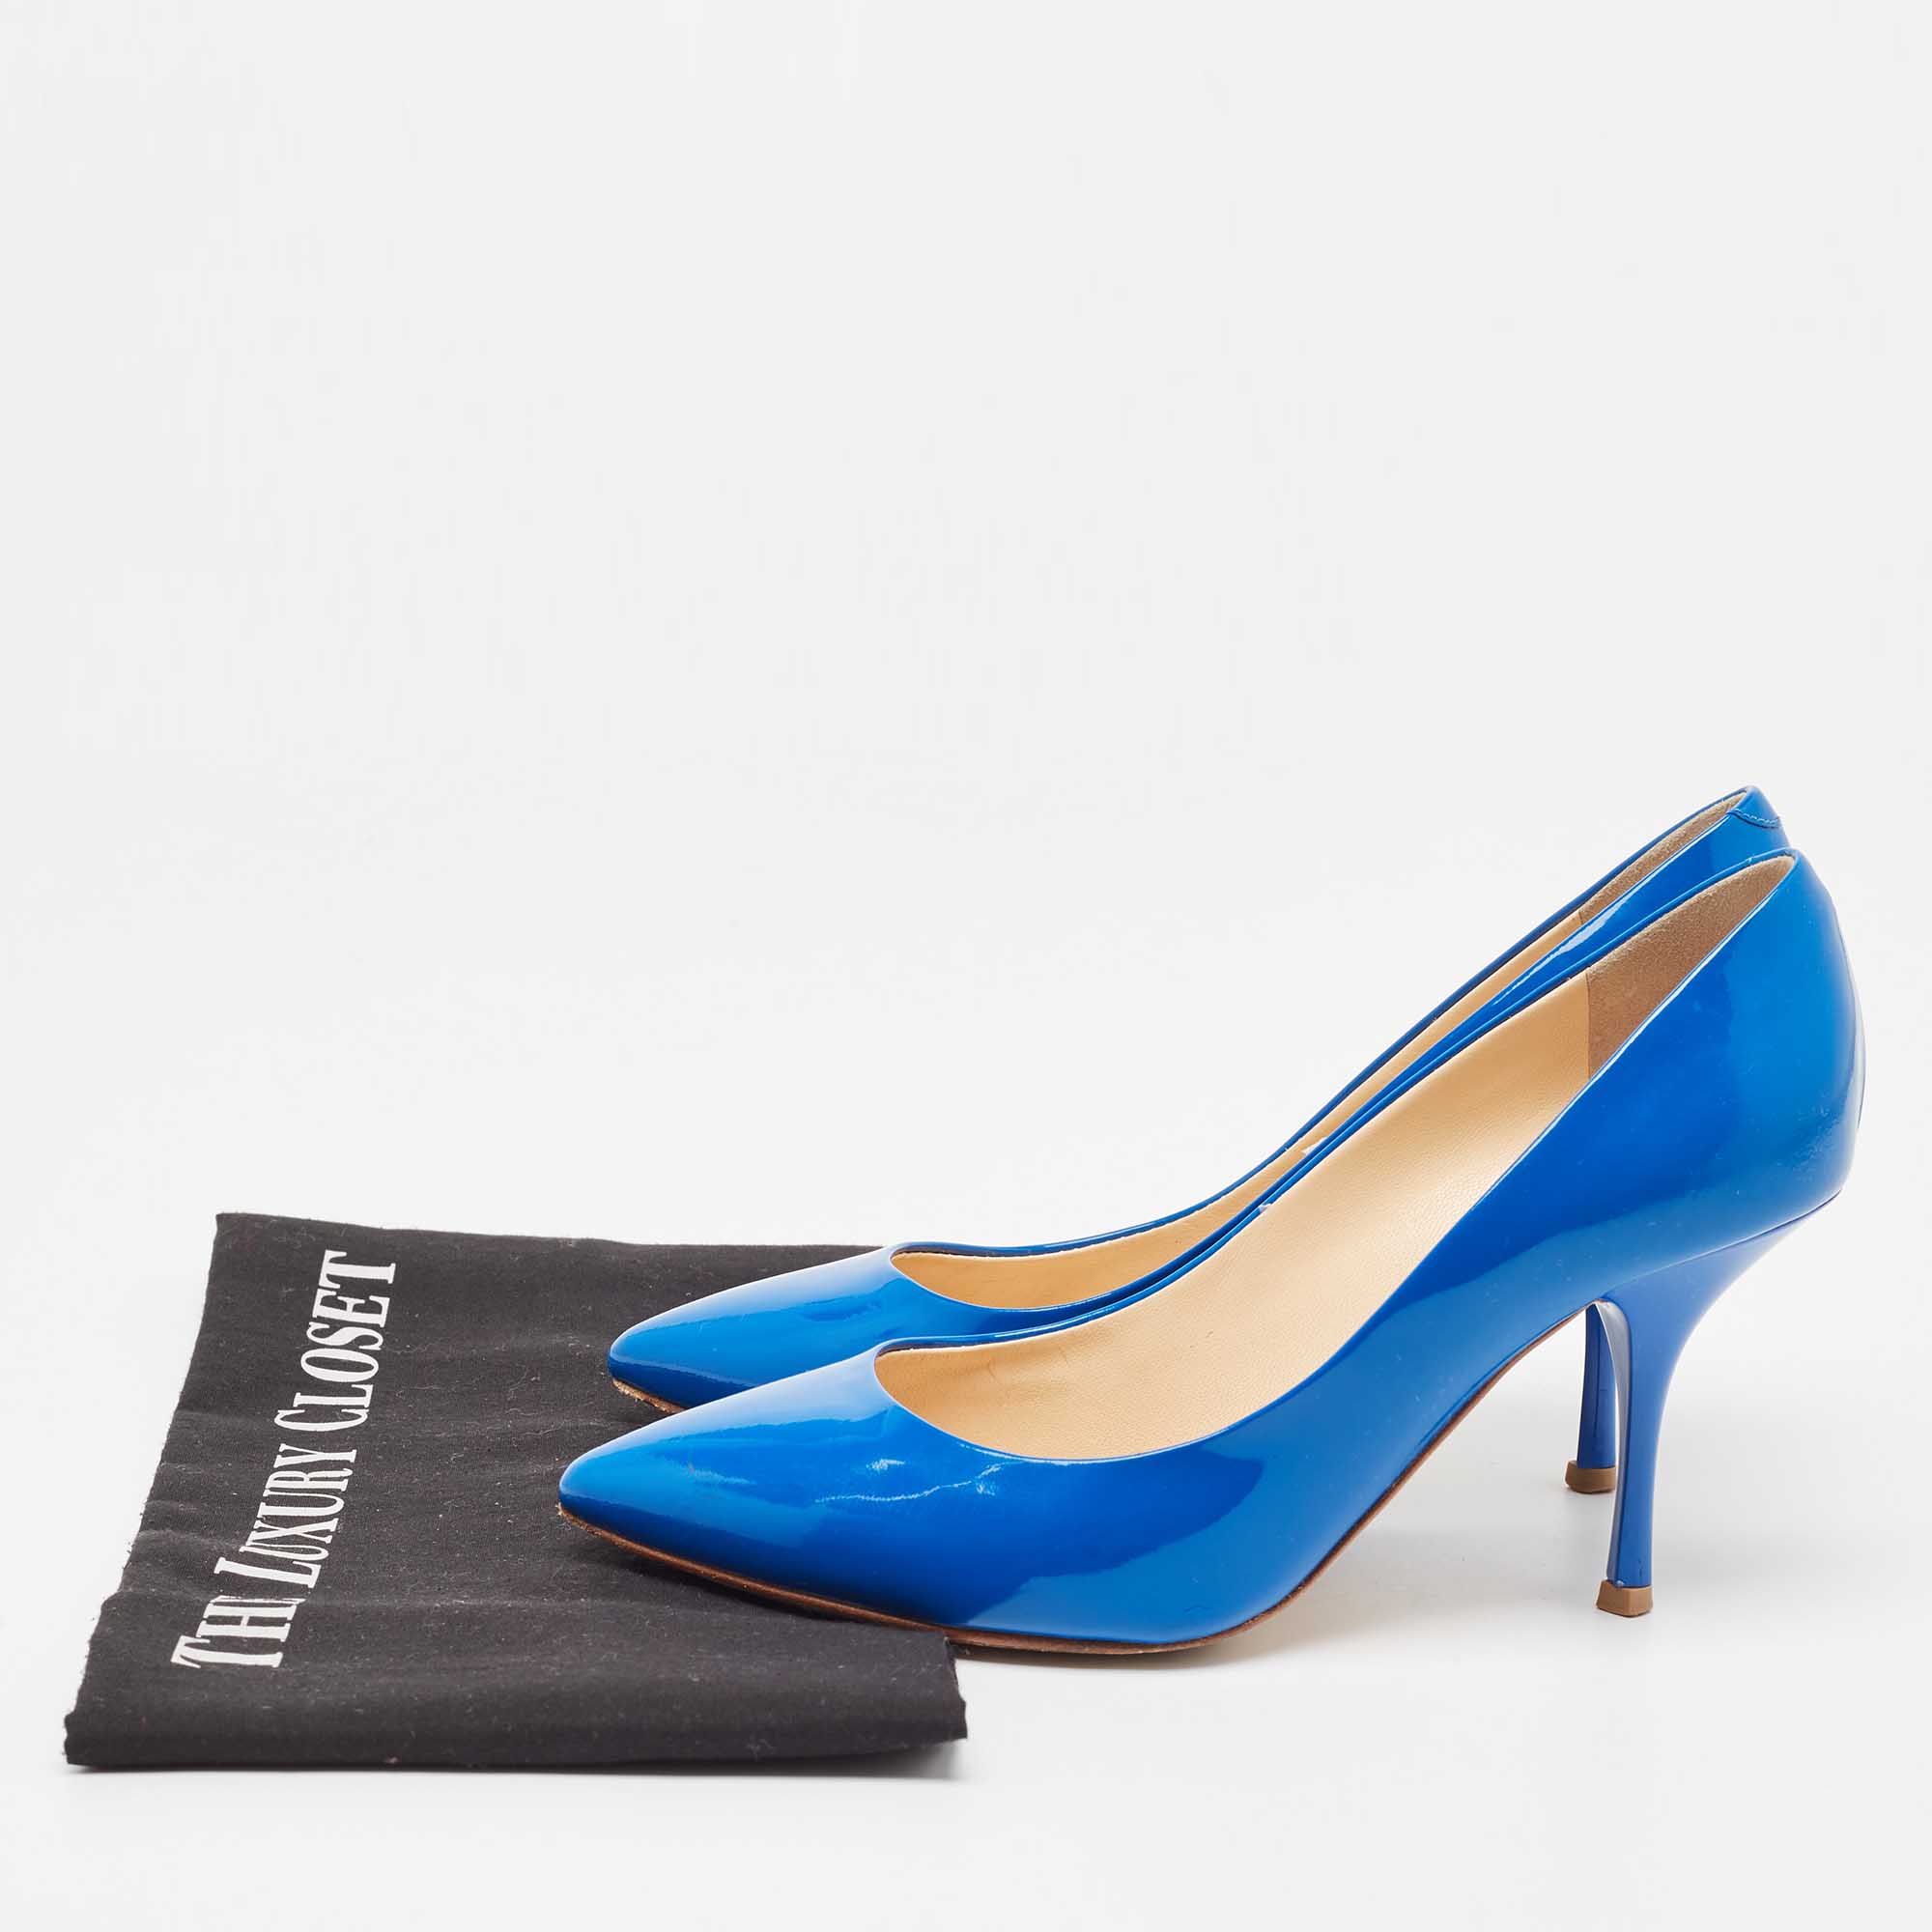 Giuseppe Zanotti Blue Patent Leather Pointed Toe Pumps Size 37.5